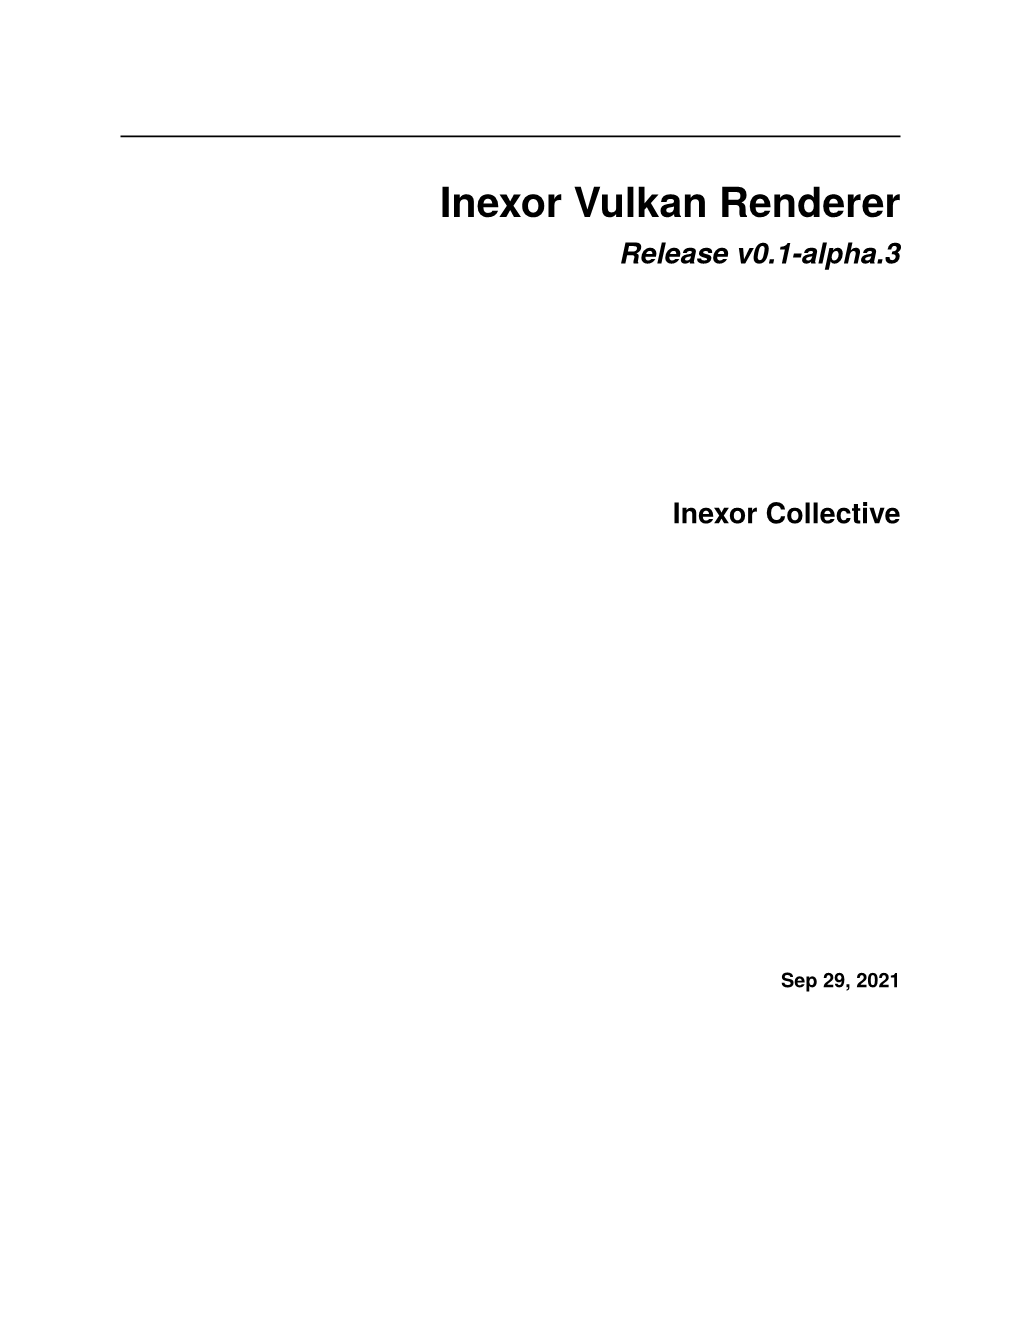 Release V0.1-Alpha.3 Inexor Collective